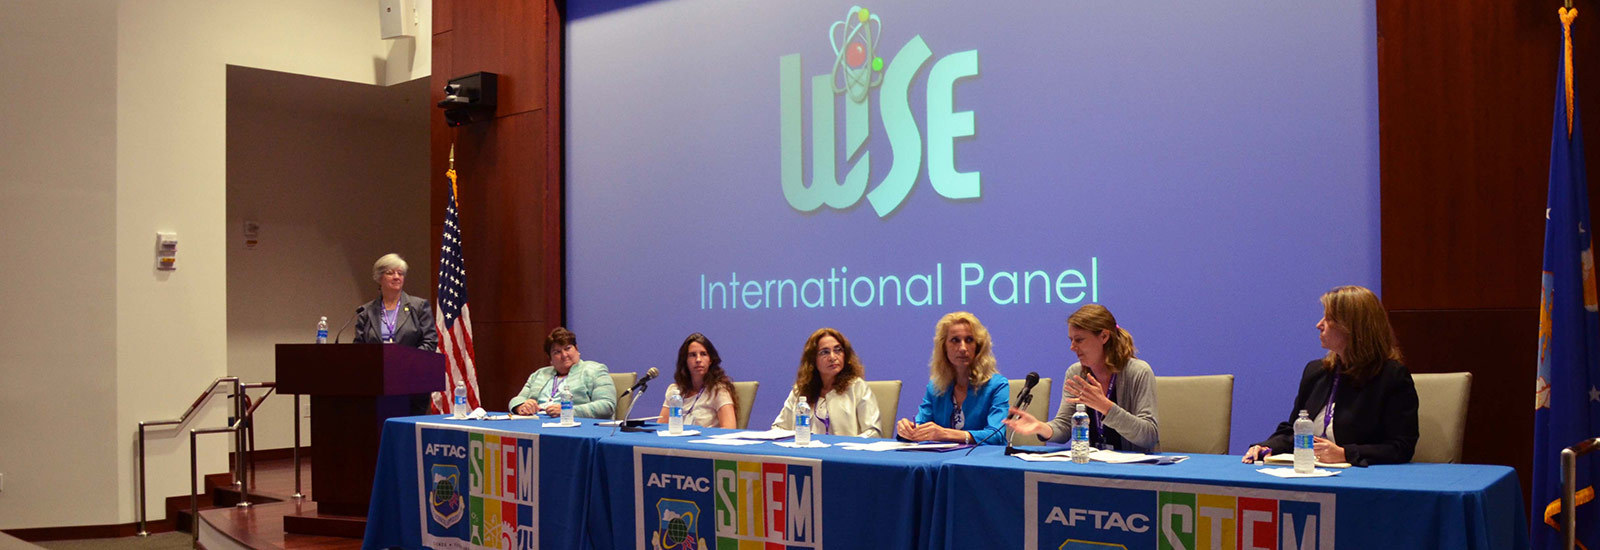 WiSE International Panel